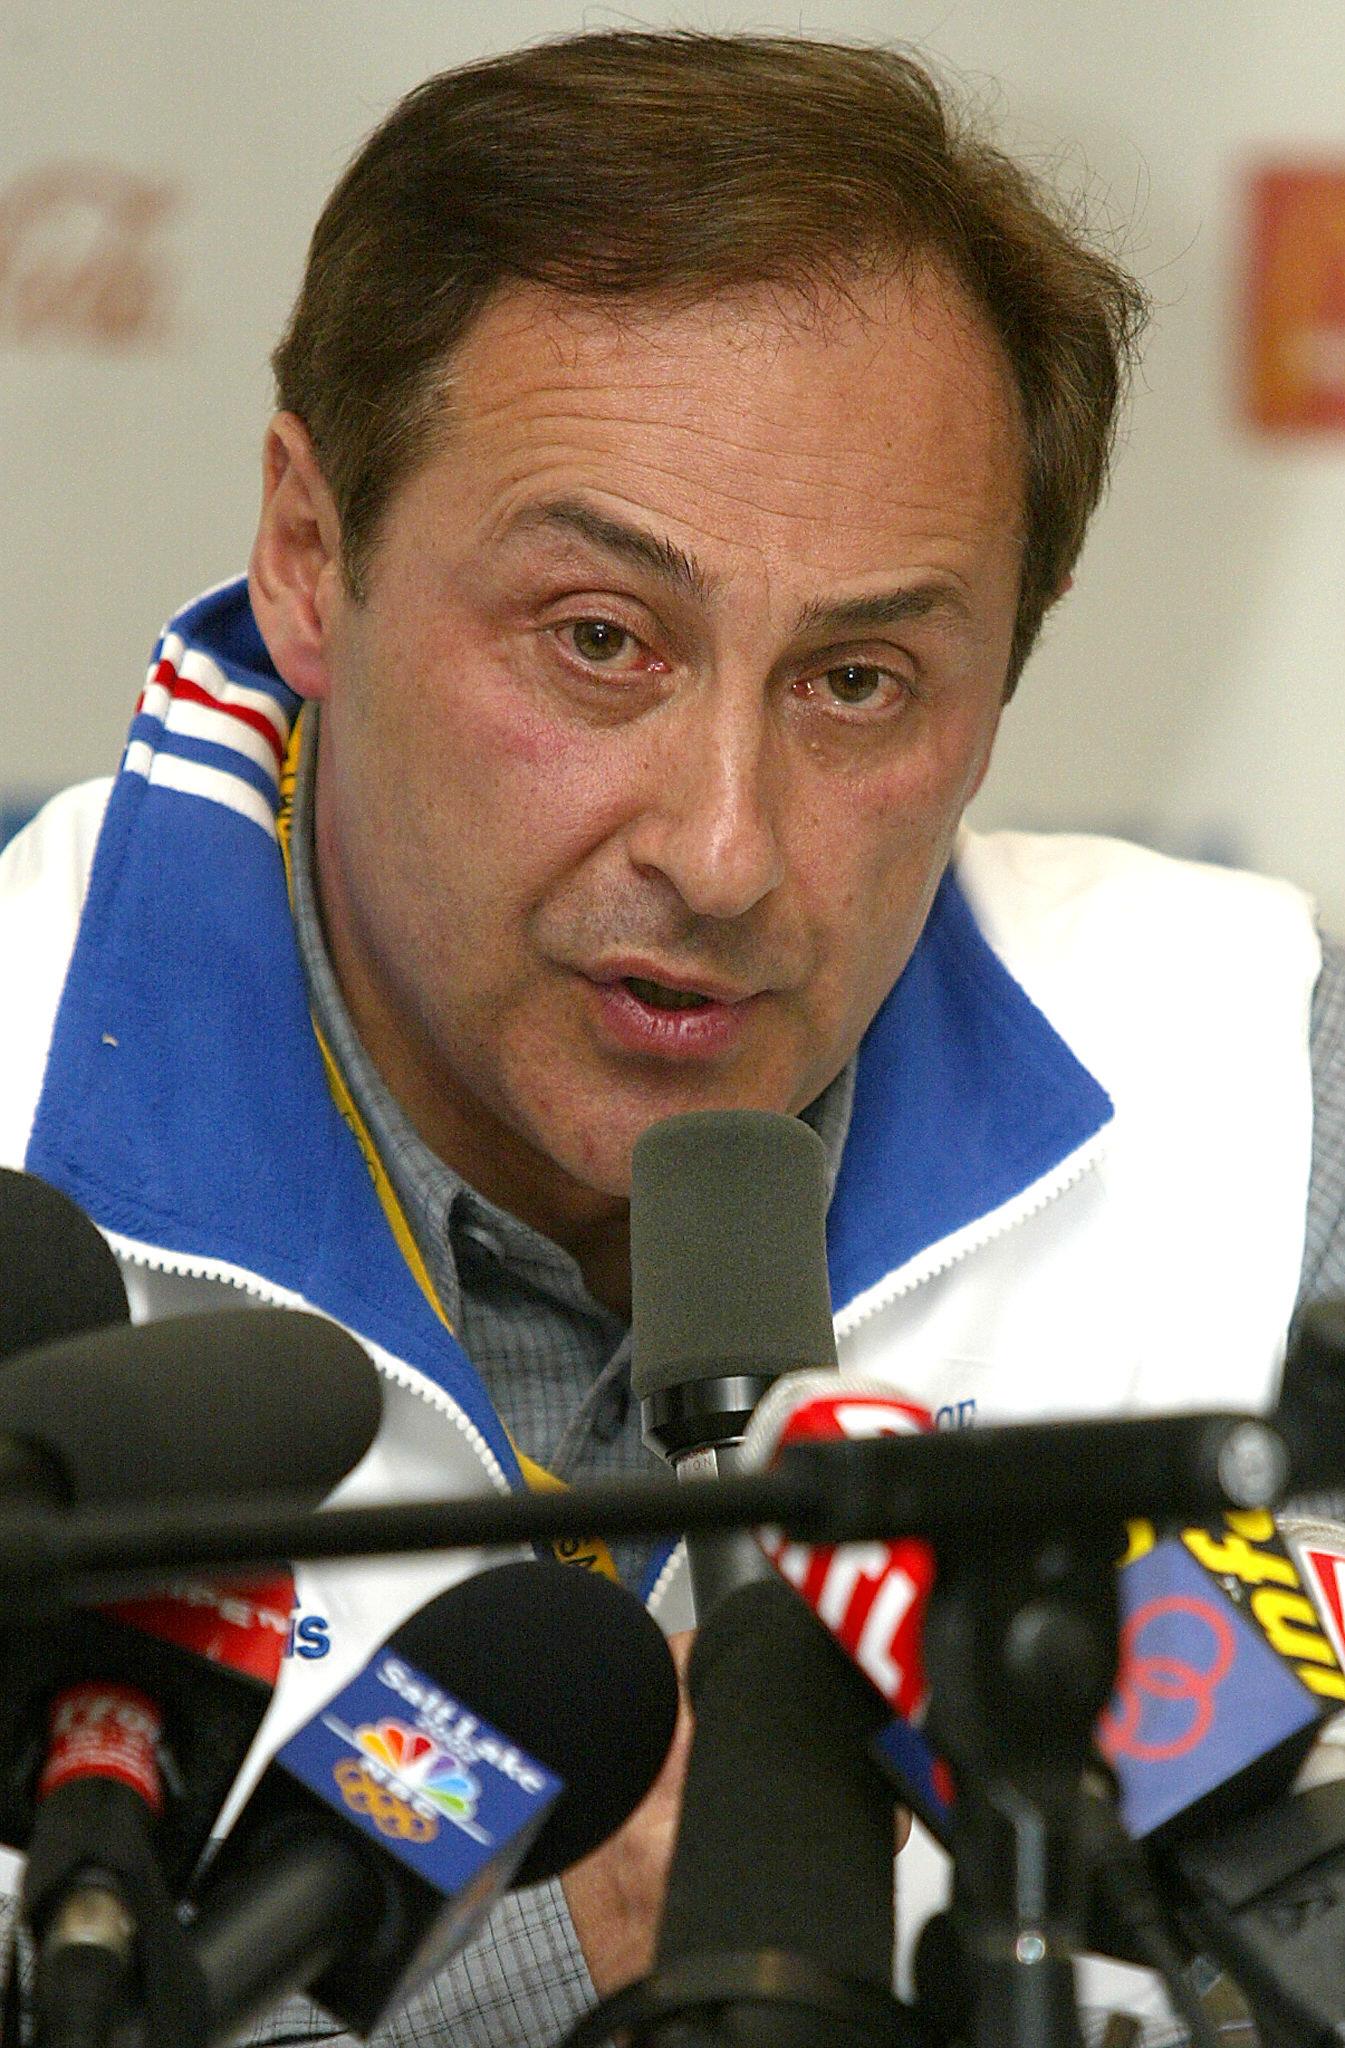 Didier Gailhaguet